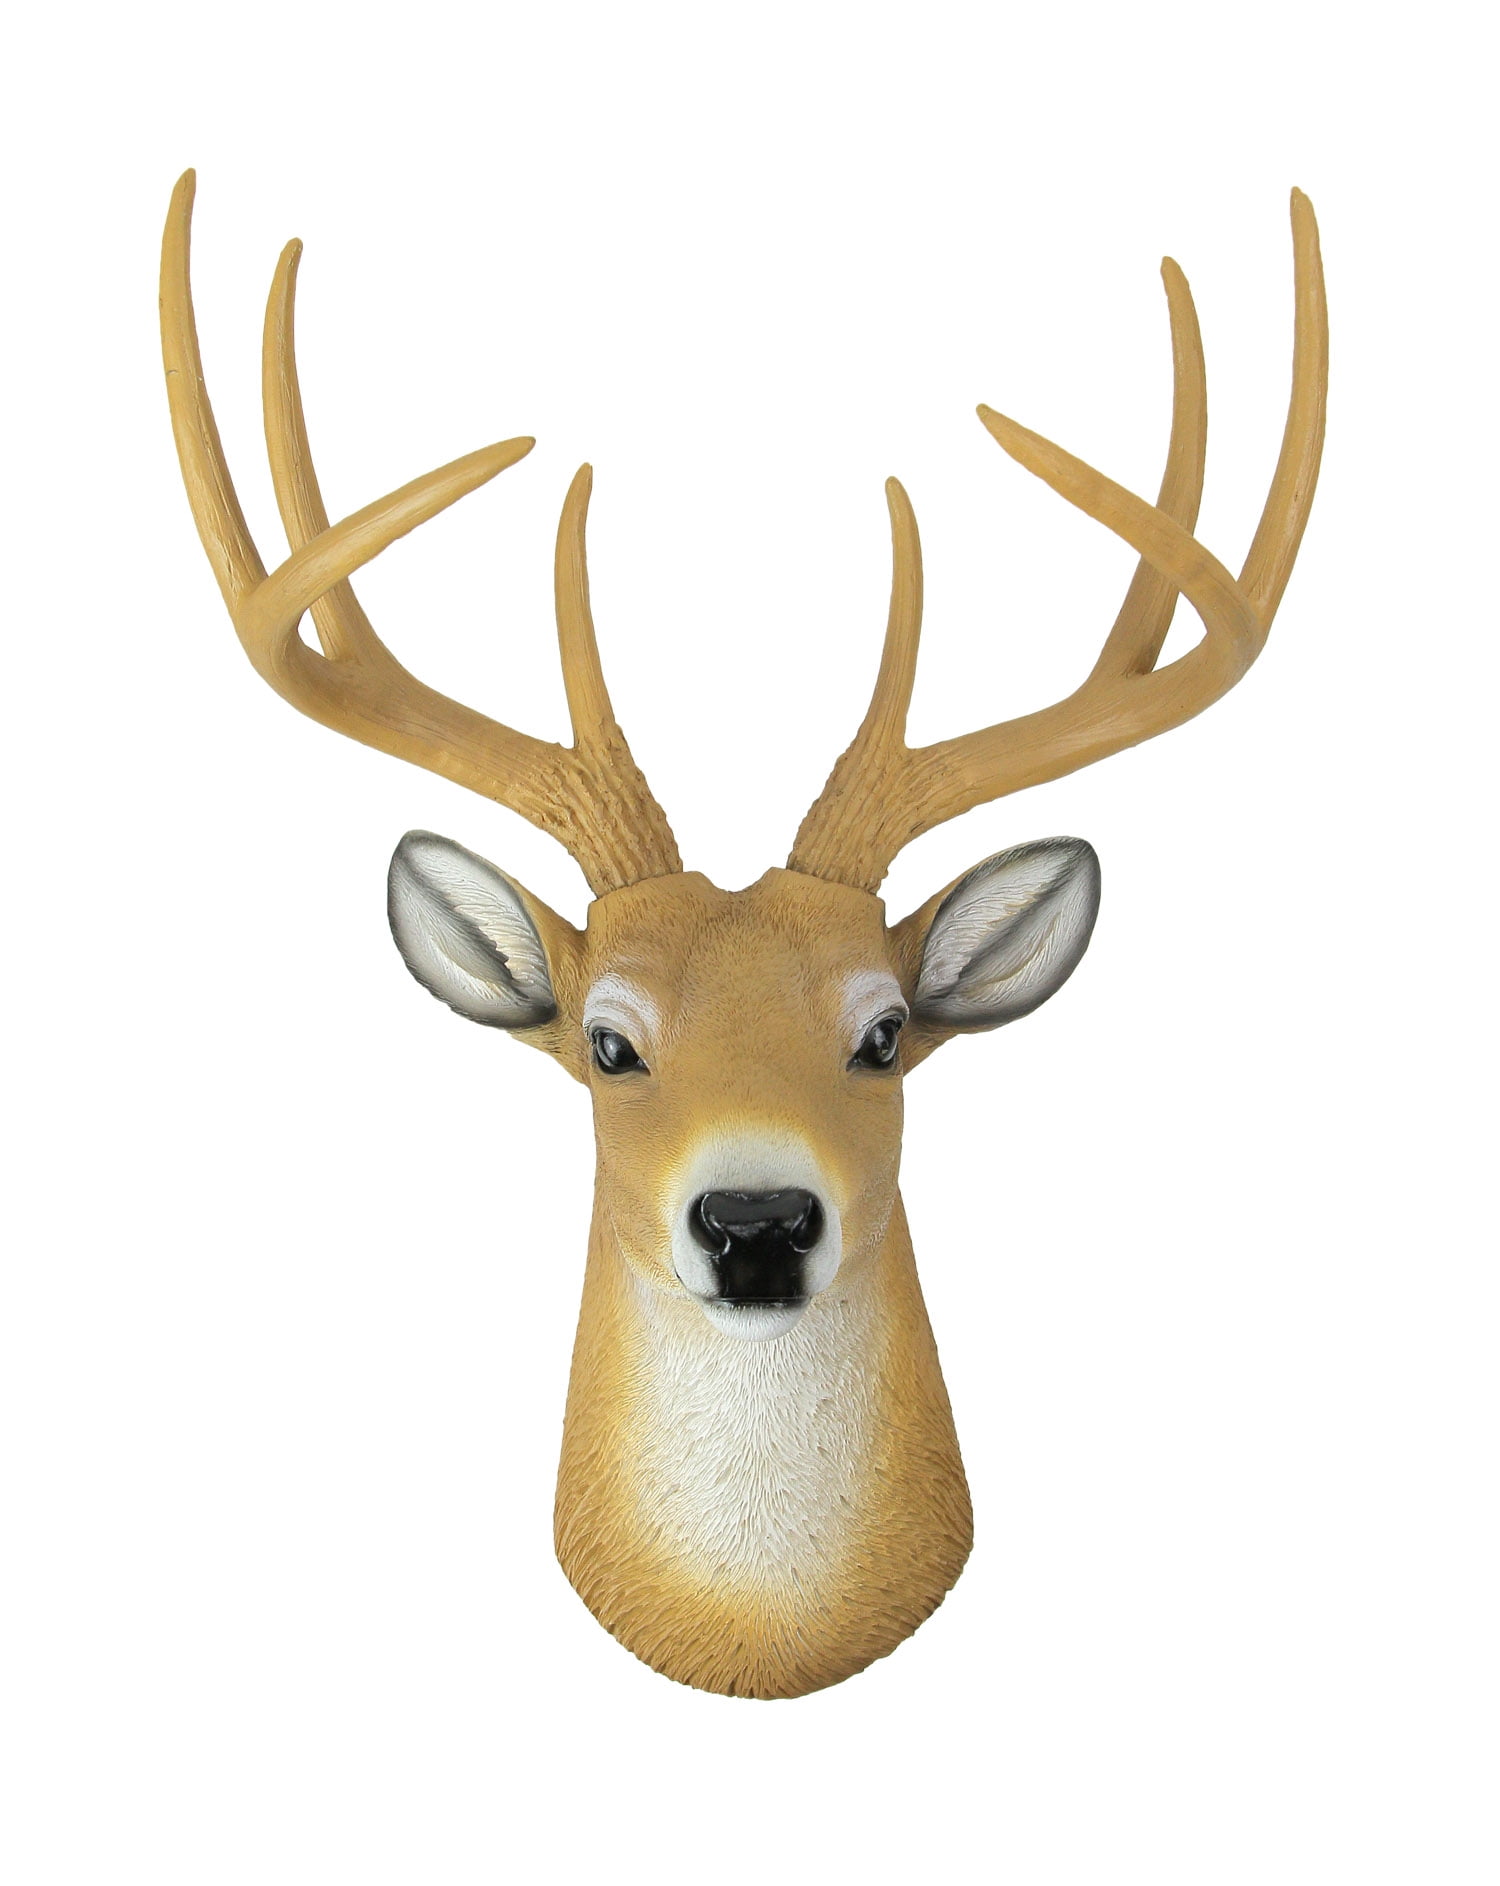 Deer Head Buck Horns Wall Mounted Antler Trophy Faux Taxidermy Sculpture 